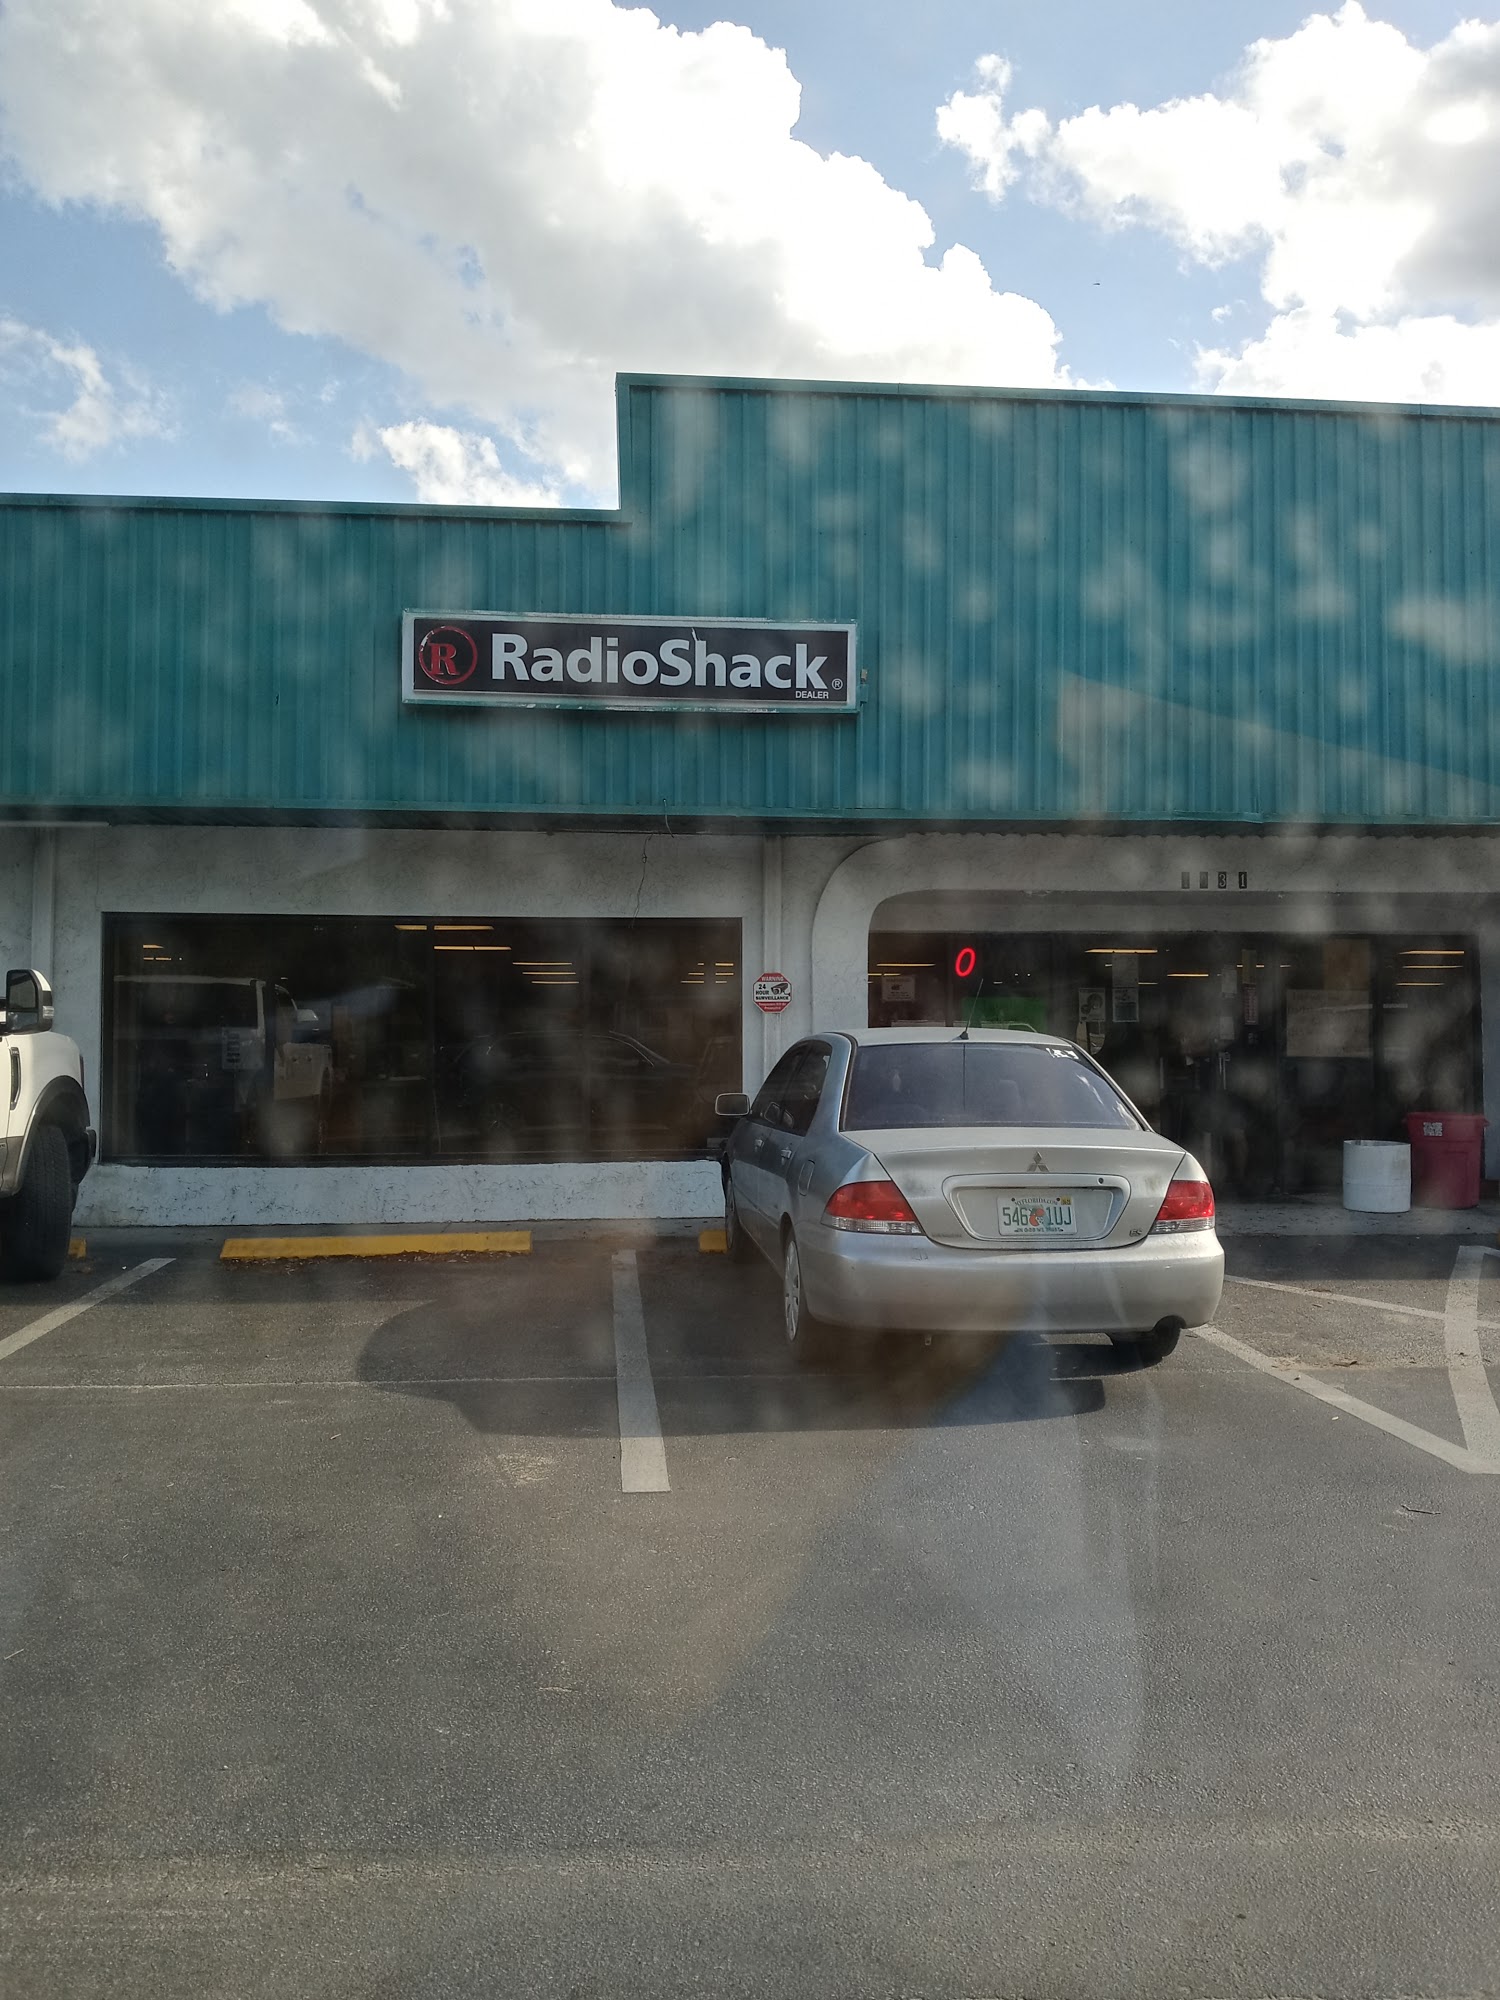 Blocker's Furniture & Appliance - RadioShack Dealer